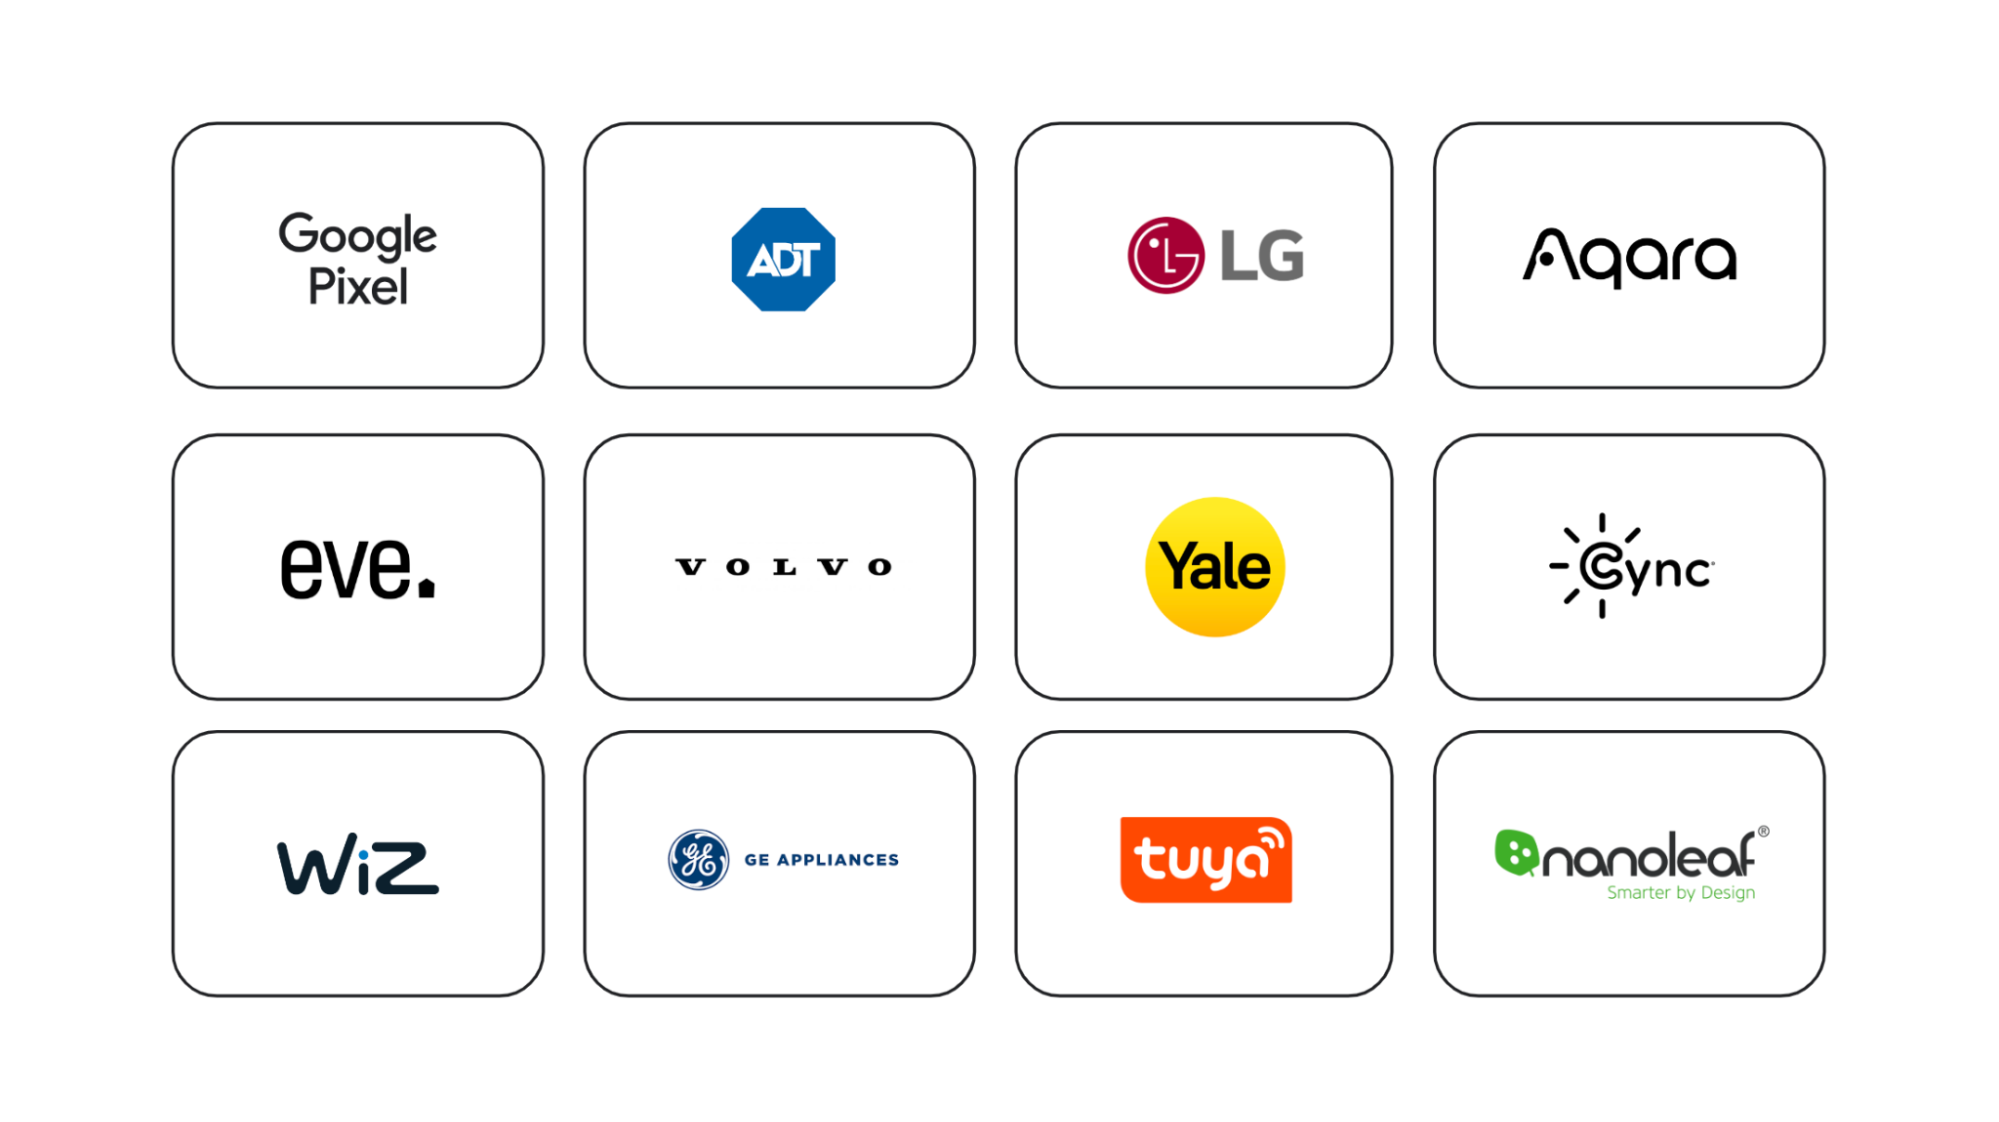 Google Home Partner Logos: Google Pixel, ADT, LG, Aqara, Eve, Volvo, Yale, Cync, Wiz, G.E. Appliances, Tuya, Nanoleaf,